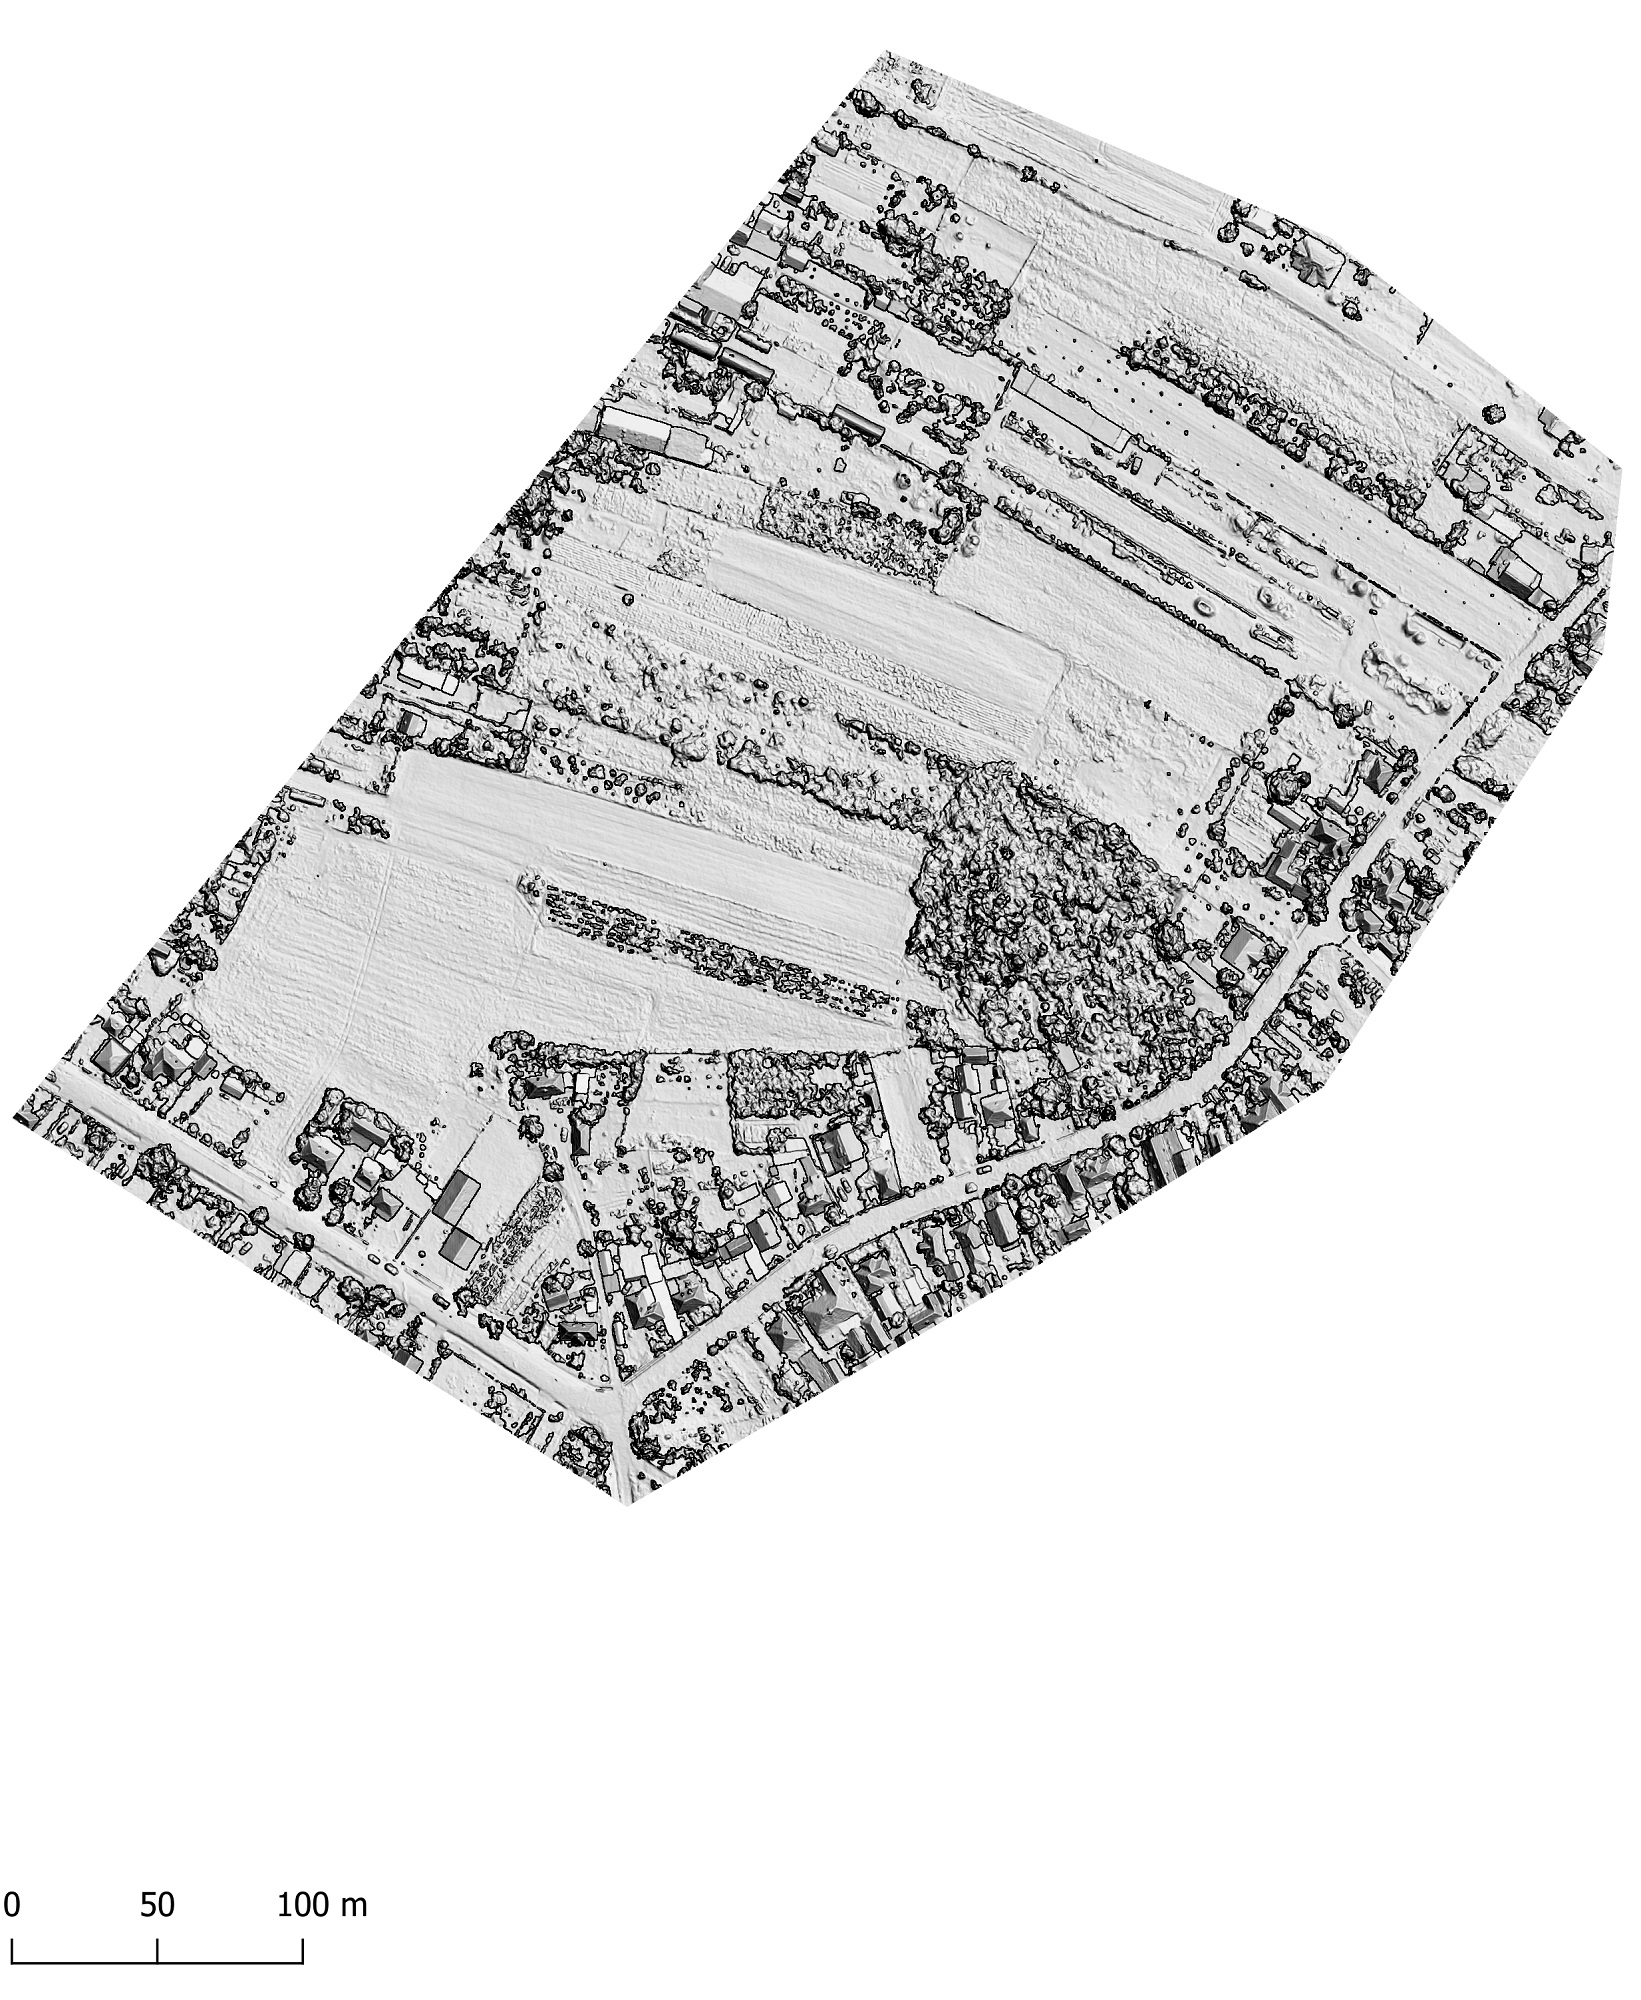 Stolniceni (Buridava romană) - model digital umbrit (hillshade)